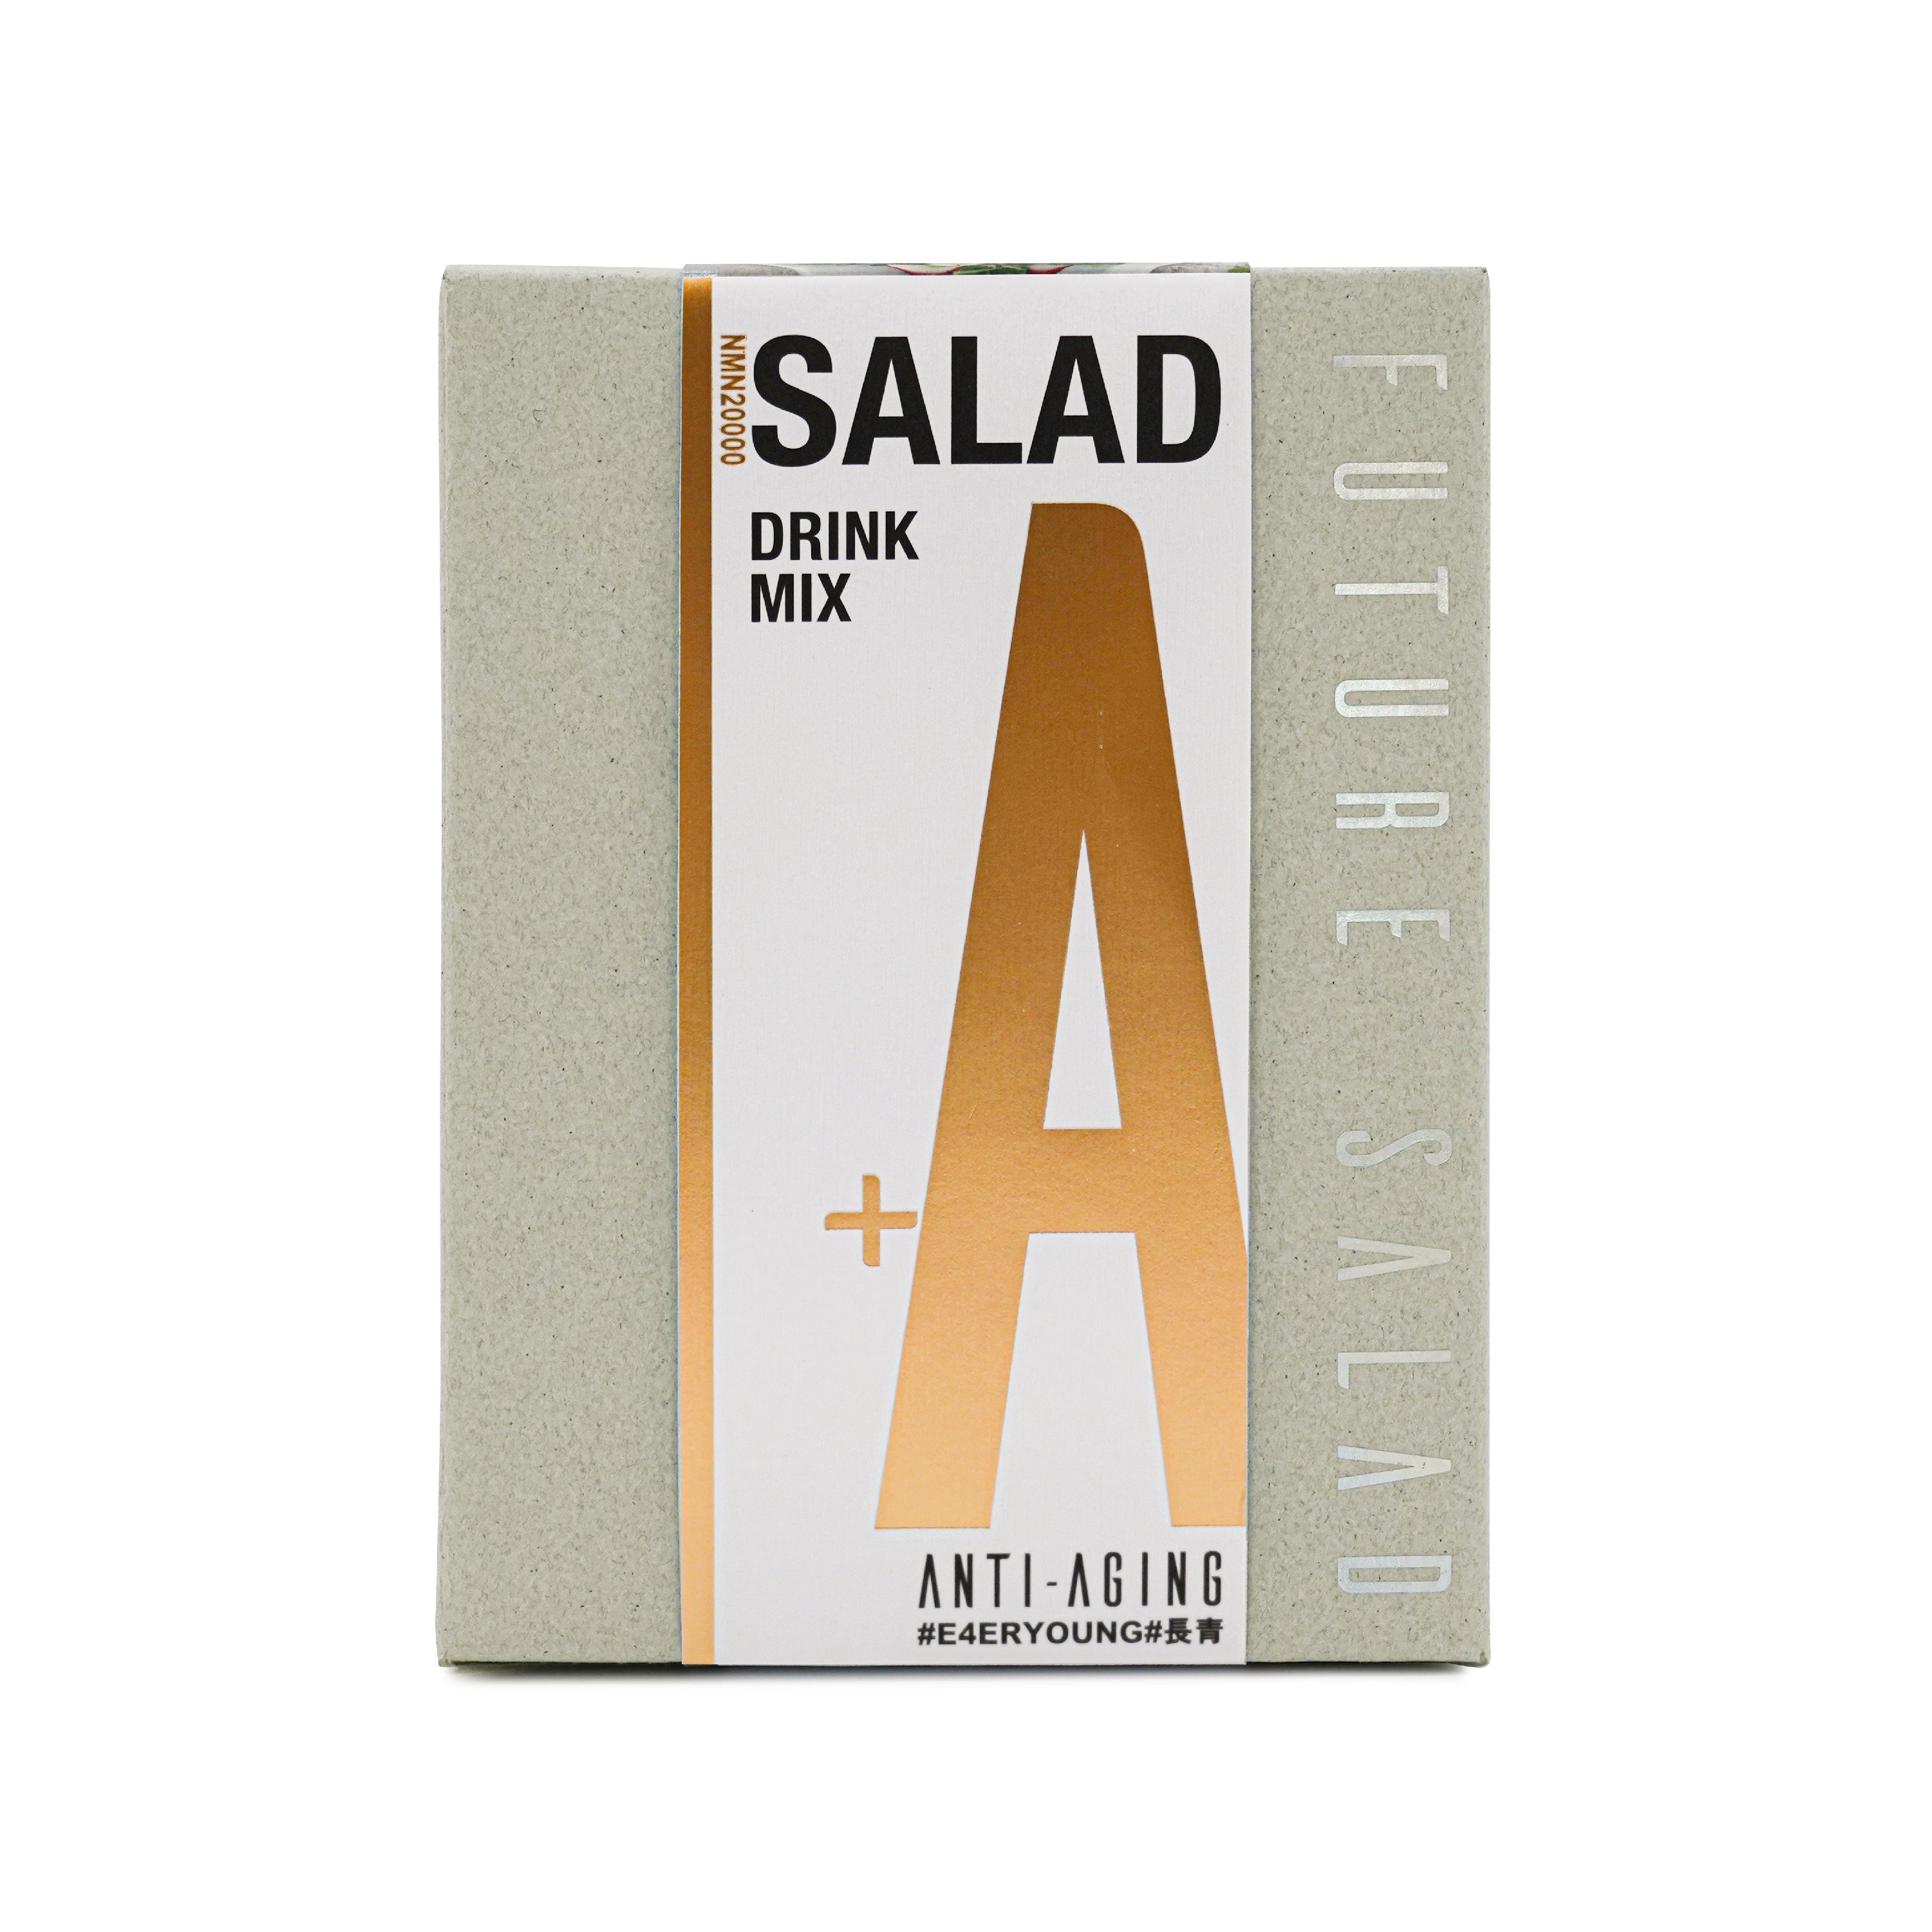 凍齡新沙律 (NMN20000) Anti-Aging Salad Drink Mix 30包裝 | Salad Drink Mix | Future Salad